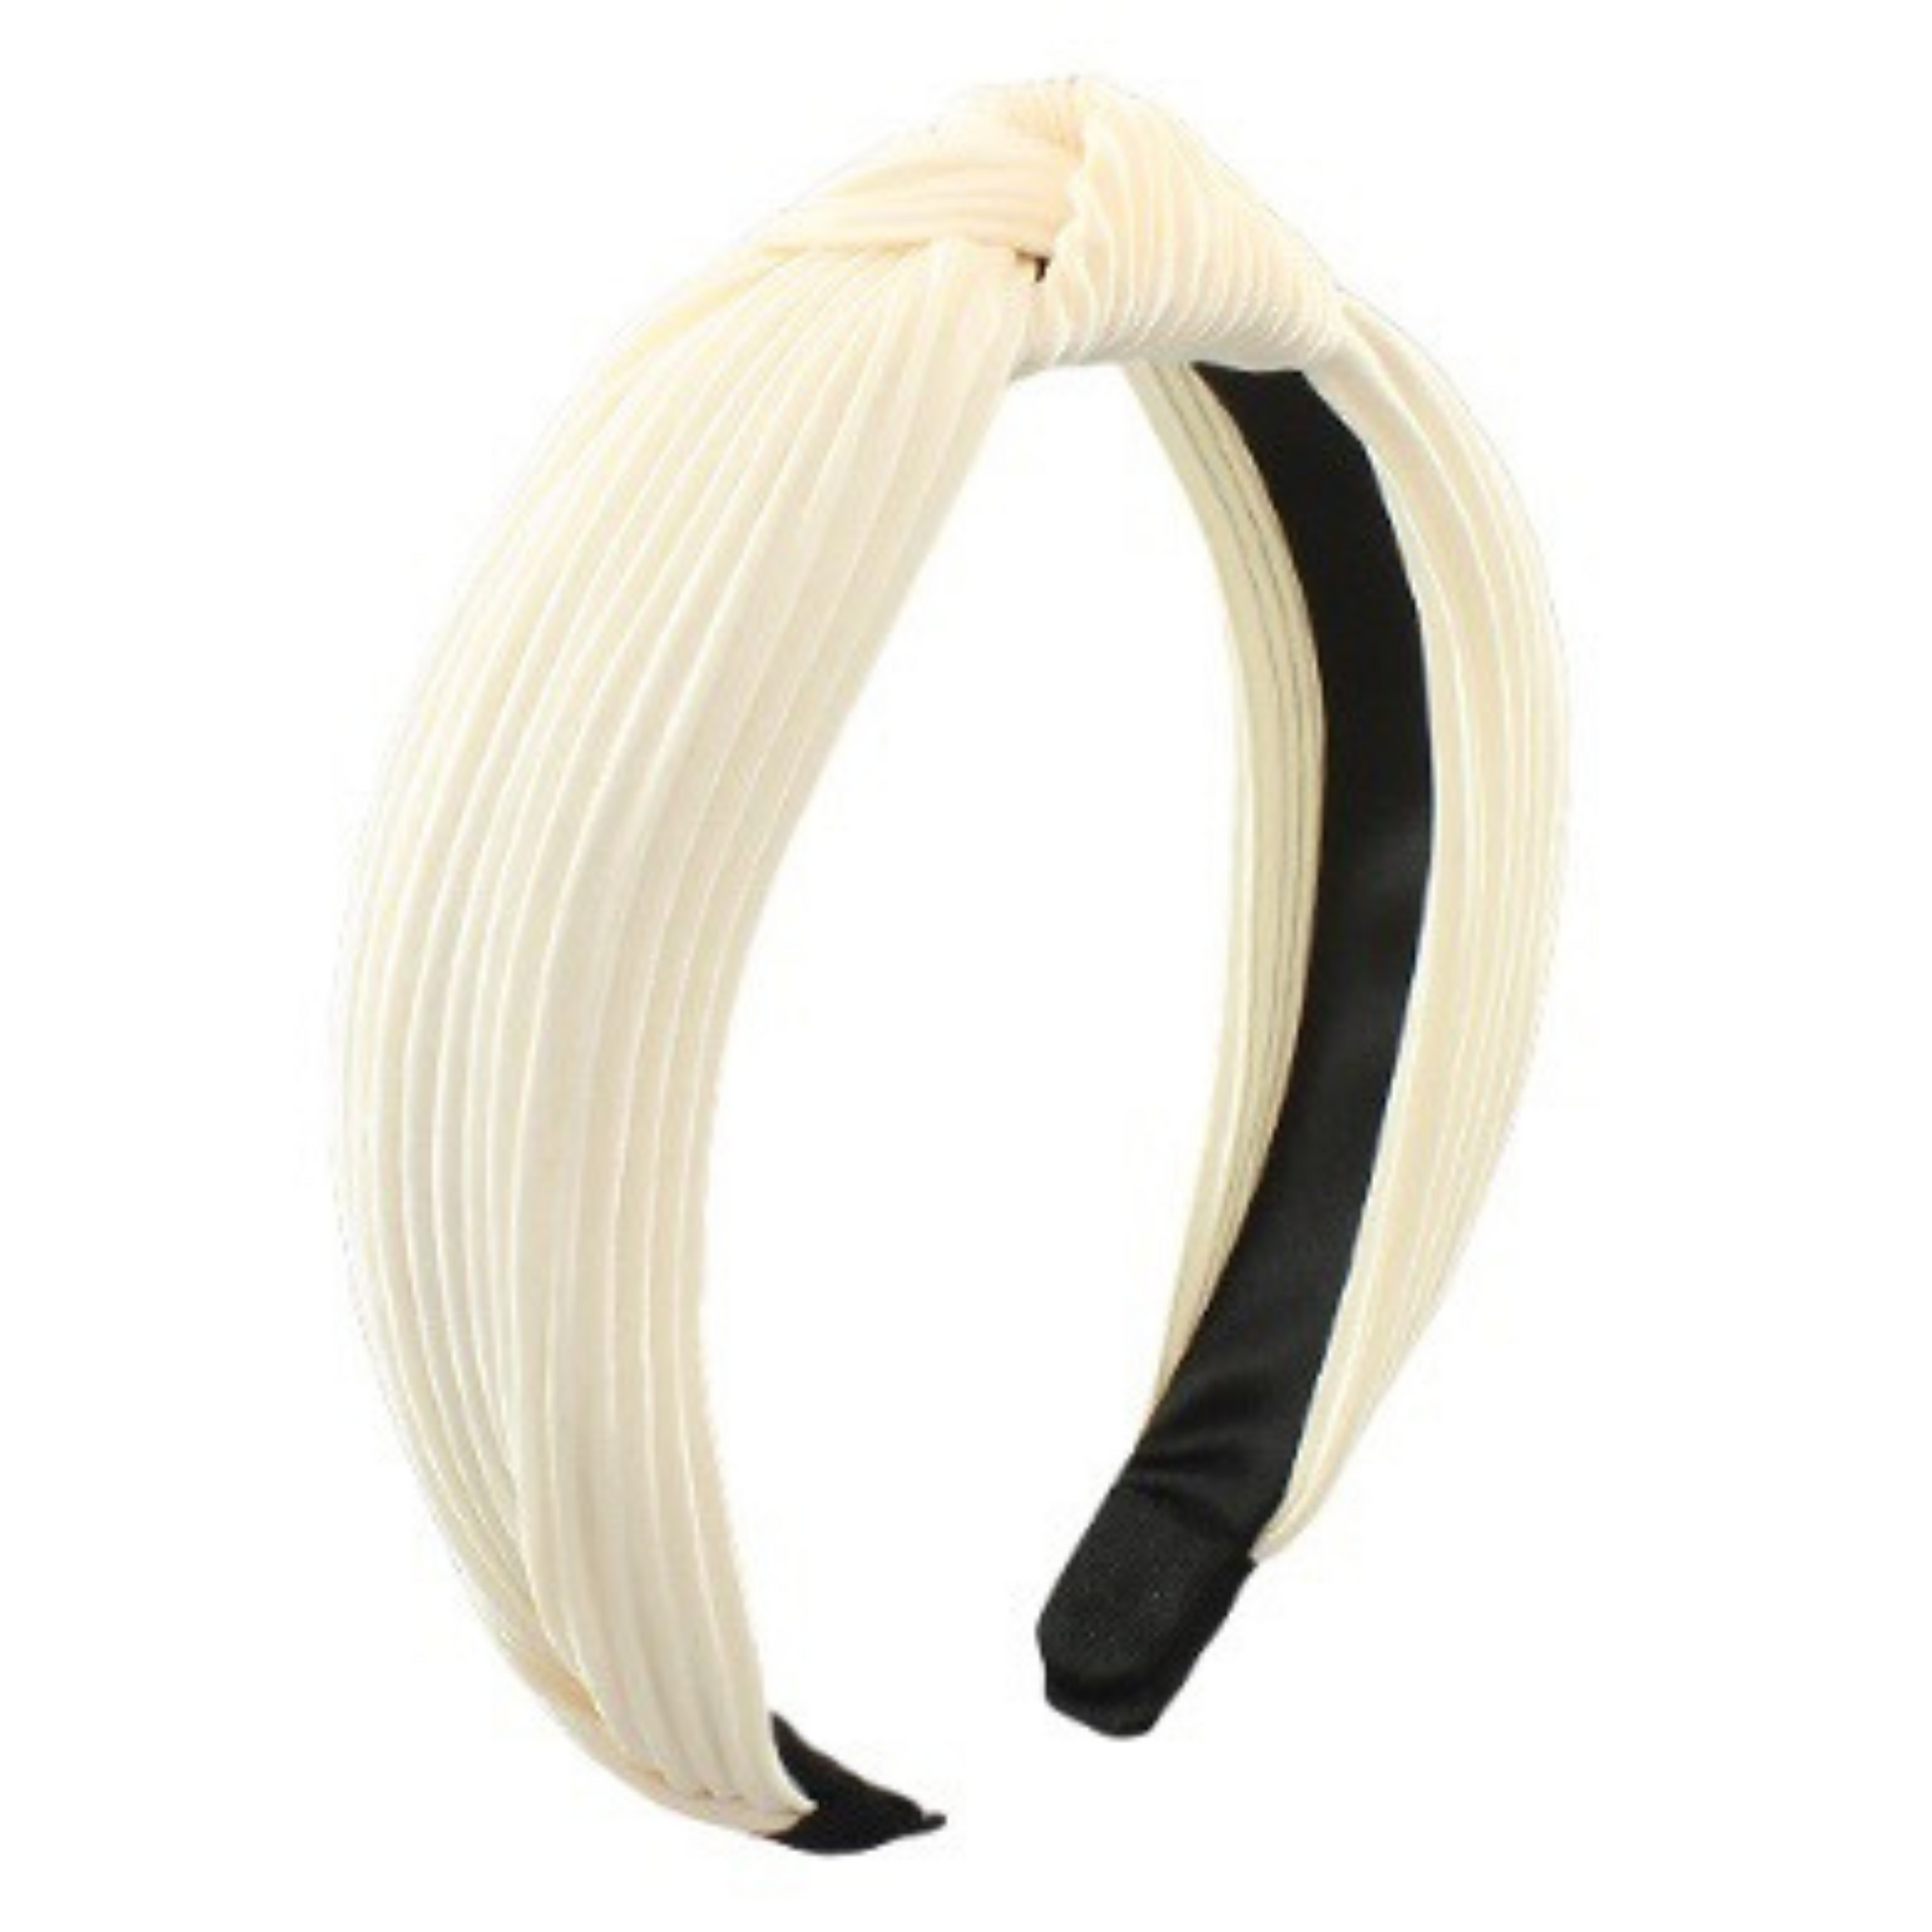 Top Knot Headband in ivory